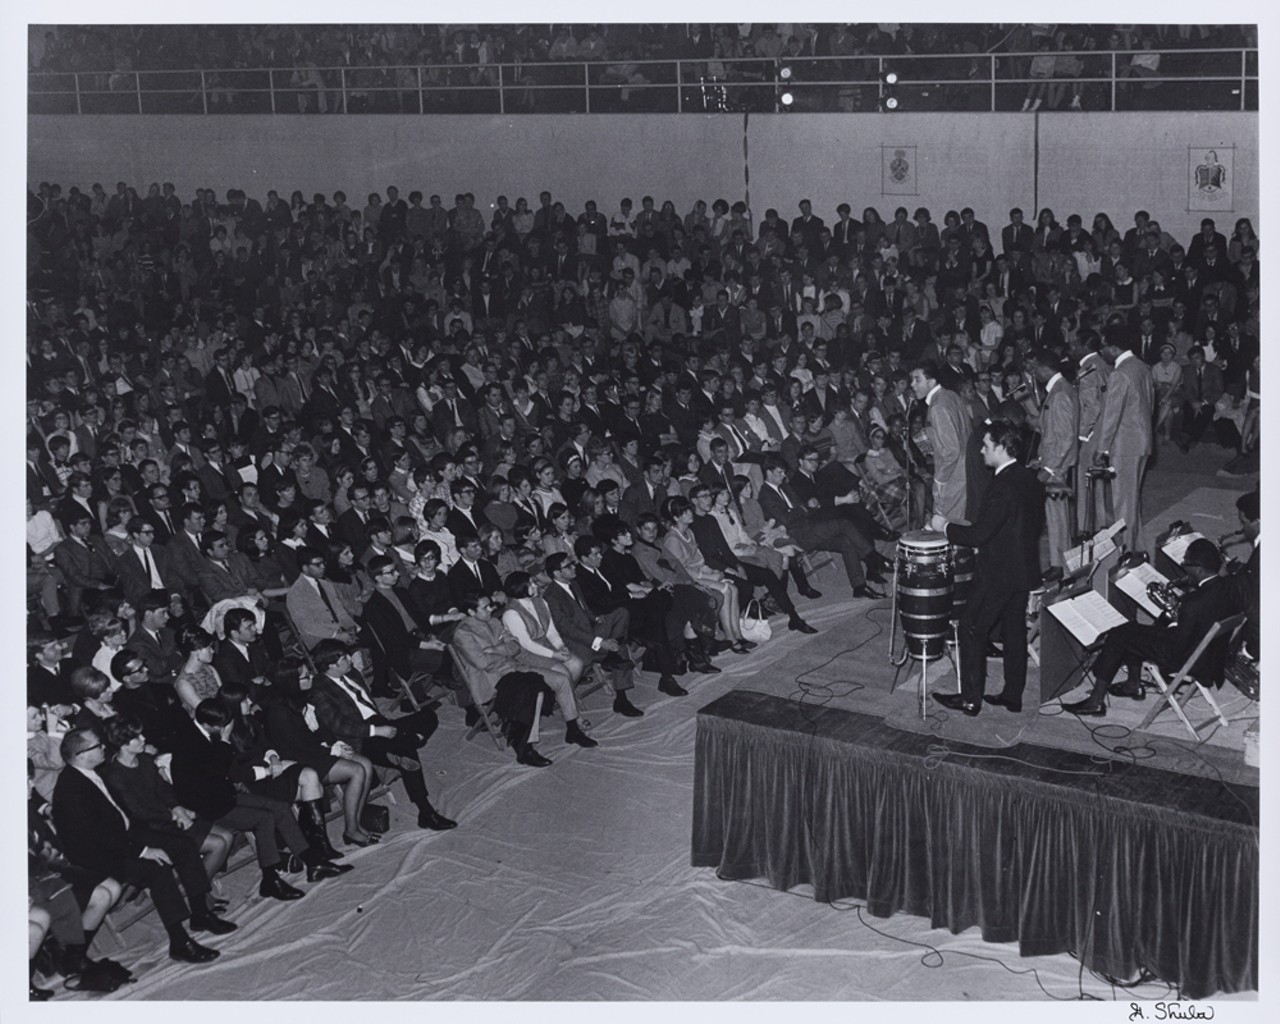 The Miracles at John Carroll University, c. 1967. (Photo by George Shuba)